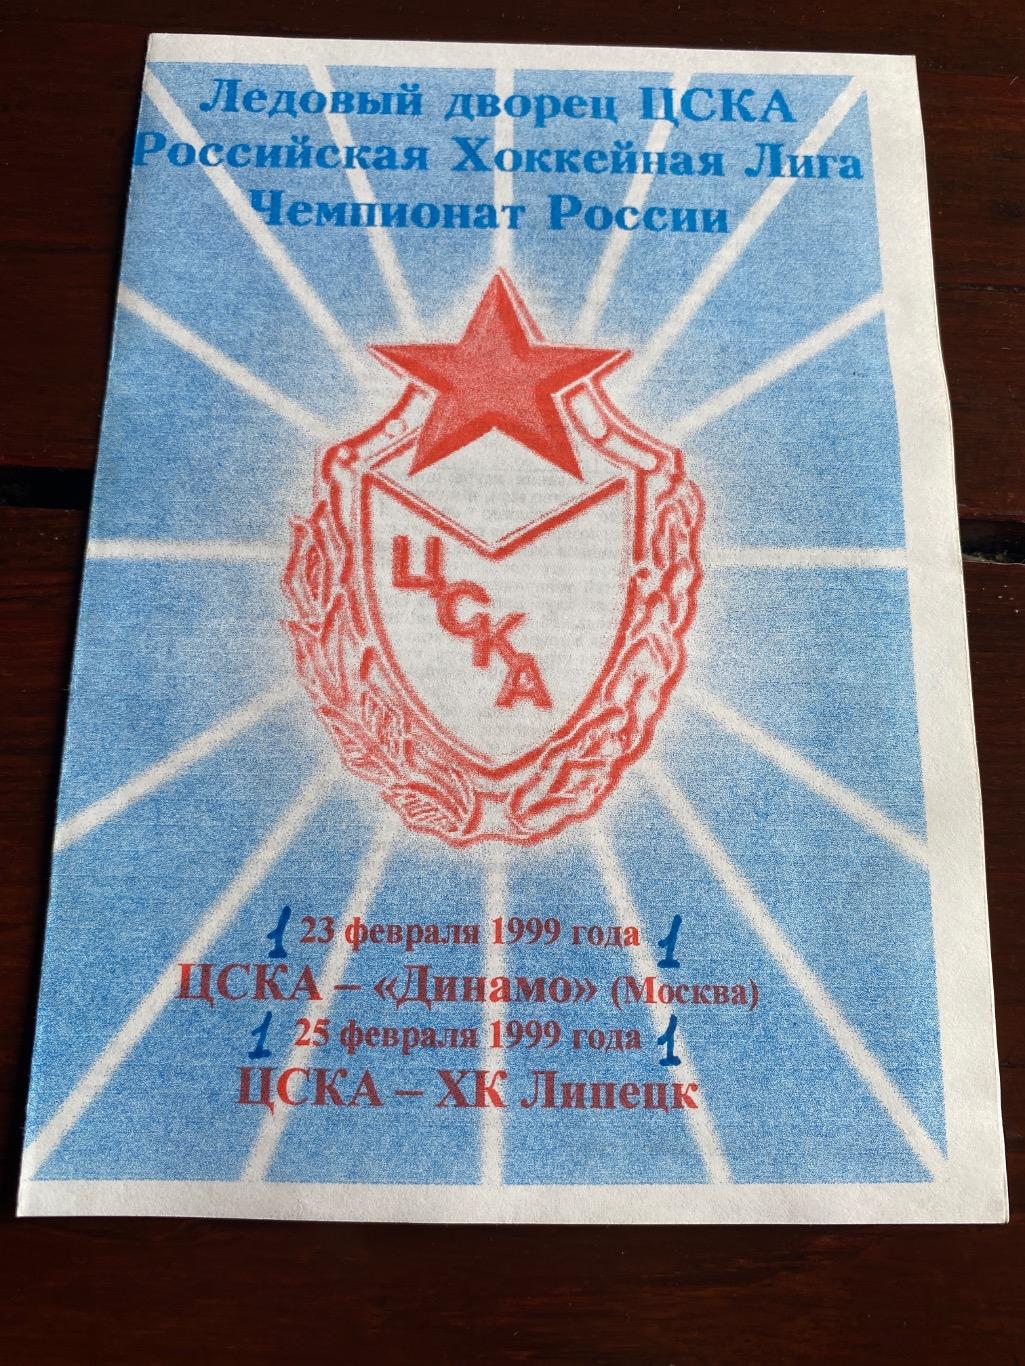 Программа ЦСКА - Динамо 23.02.1999 ЦСКА- ХК Липецк 25.02.1999